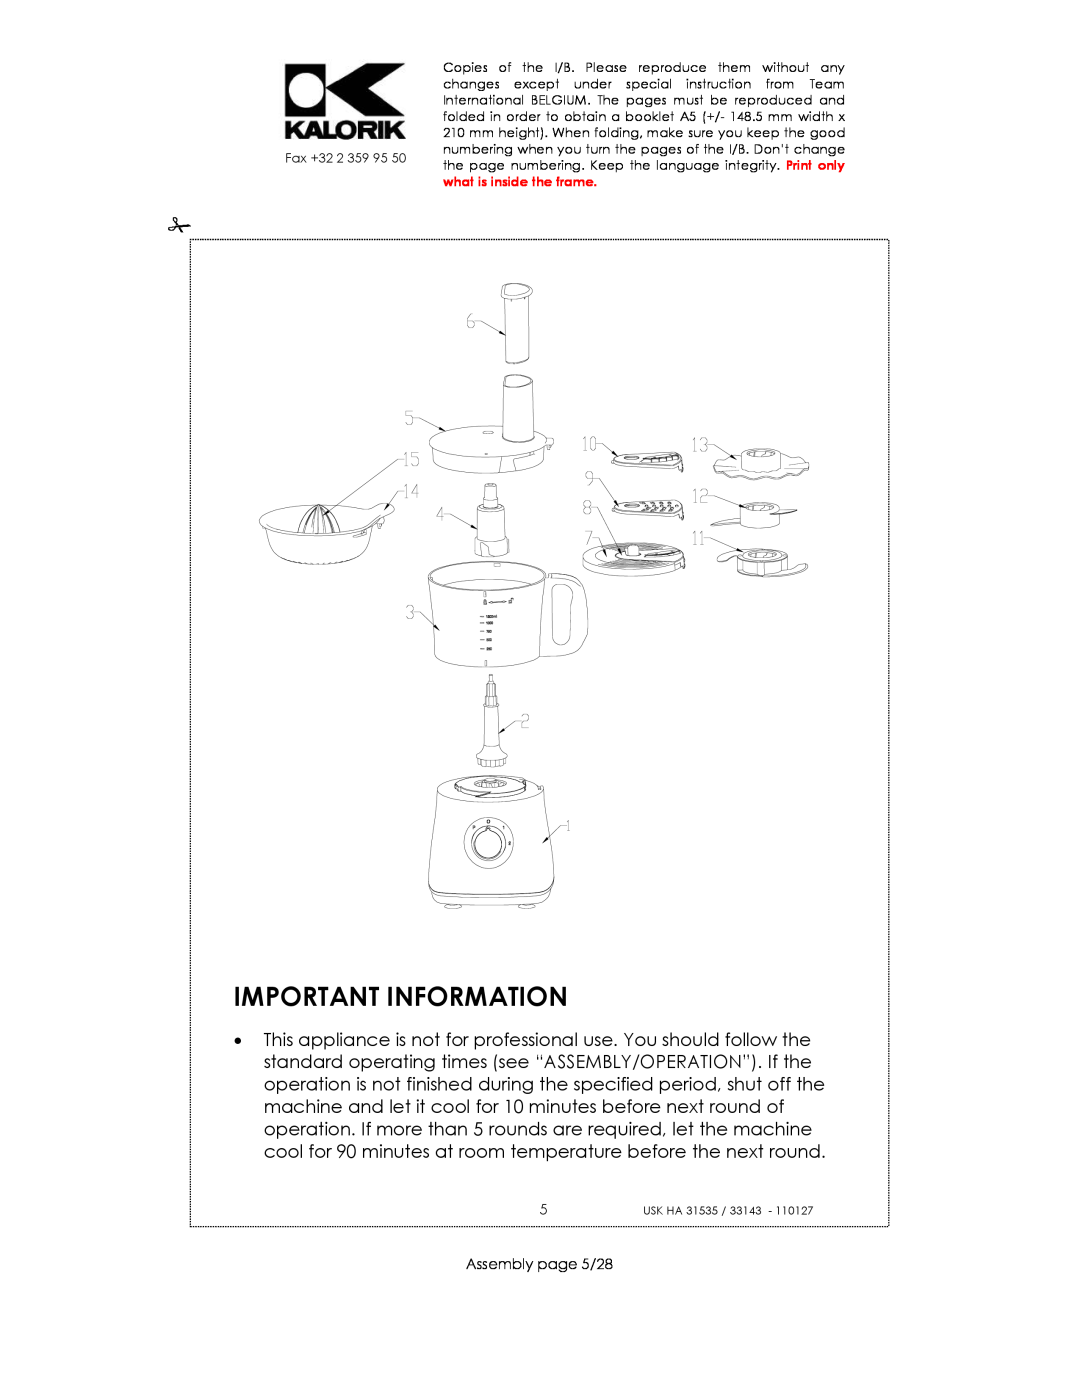 Kalorik USK HA 33143, USK HA 31535 manual Important Information, Assembly page 5/28 